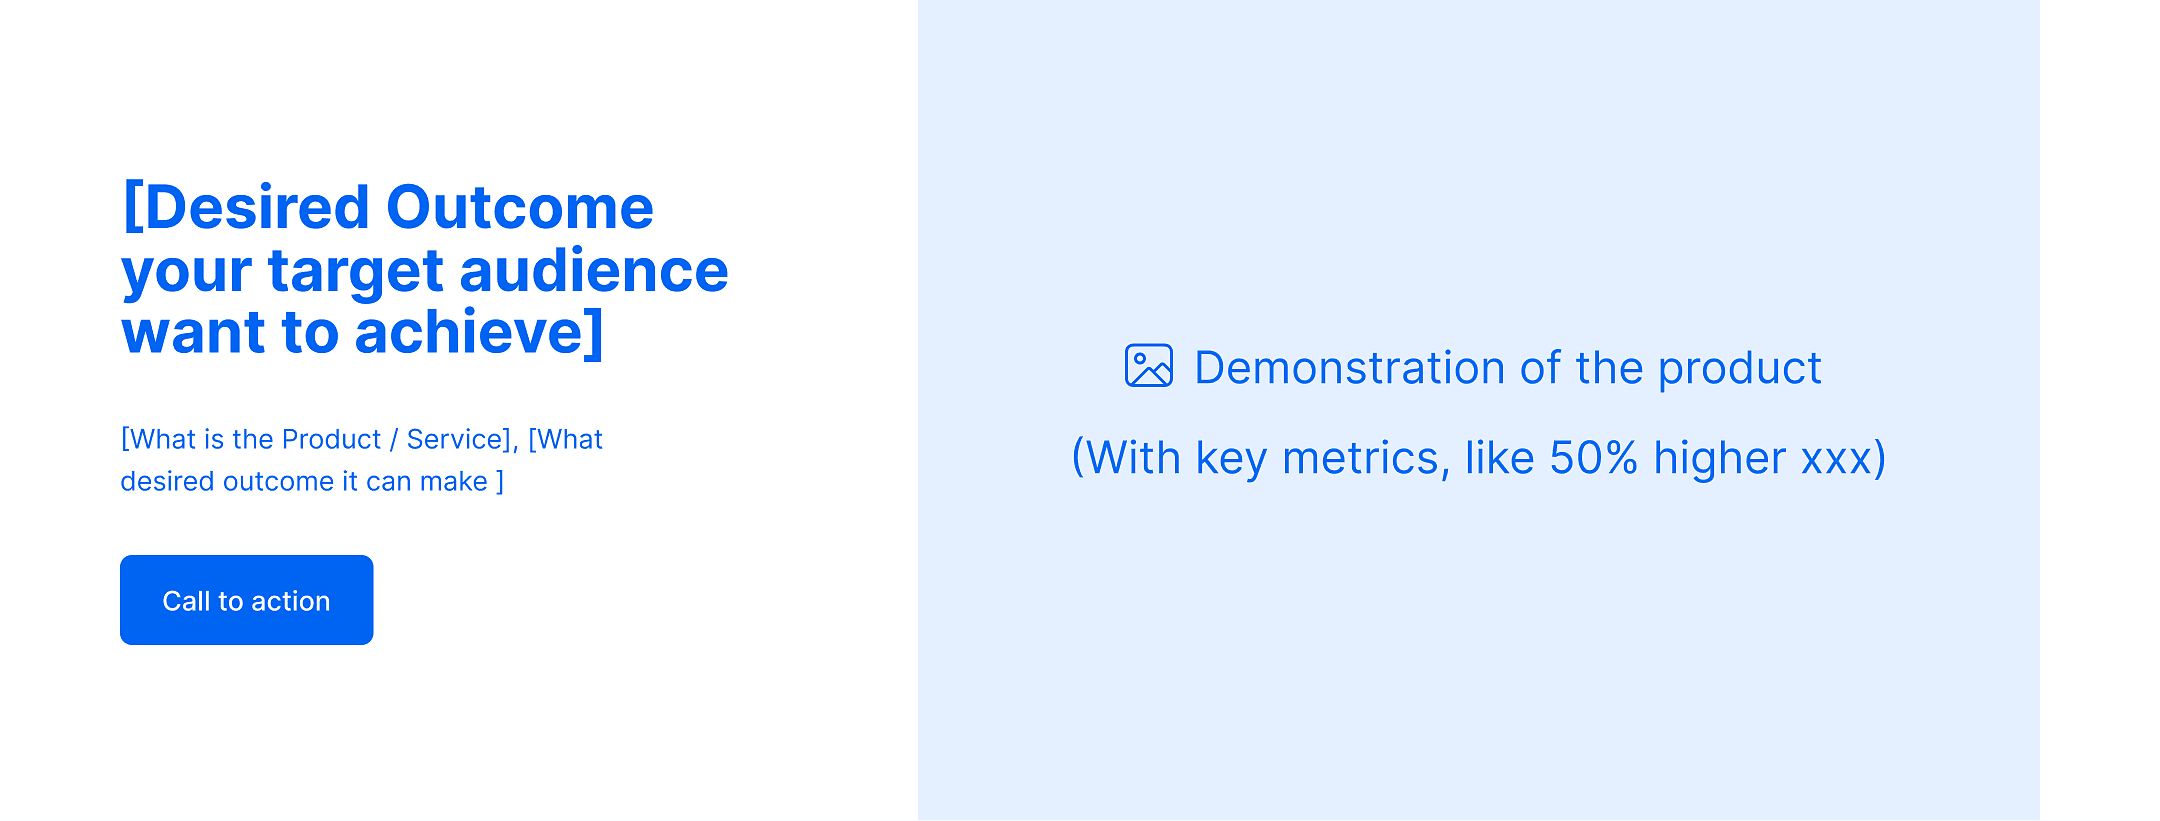 Blueprint of demonstration with key metrics